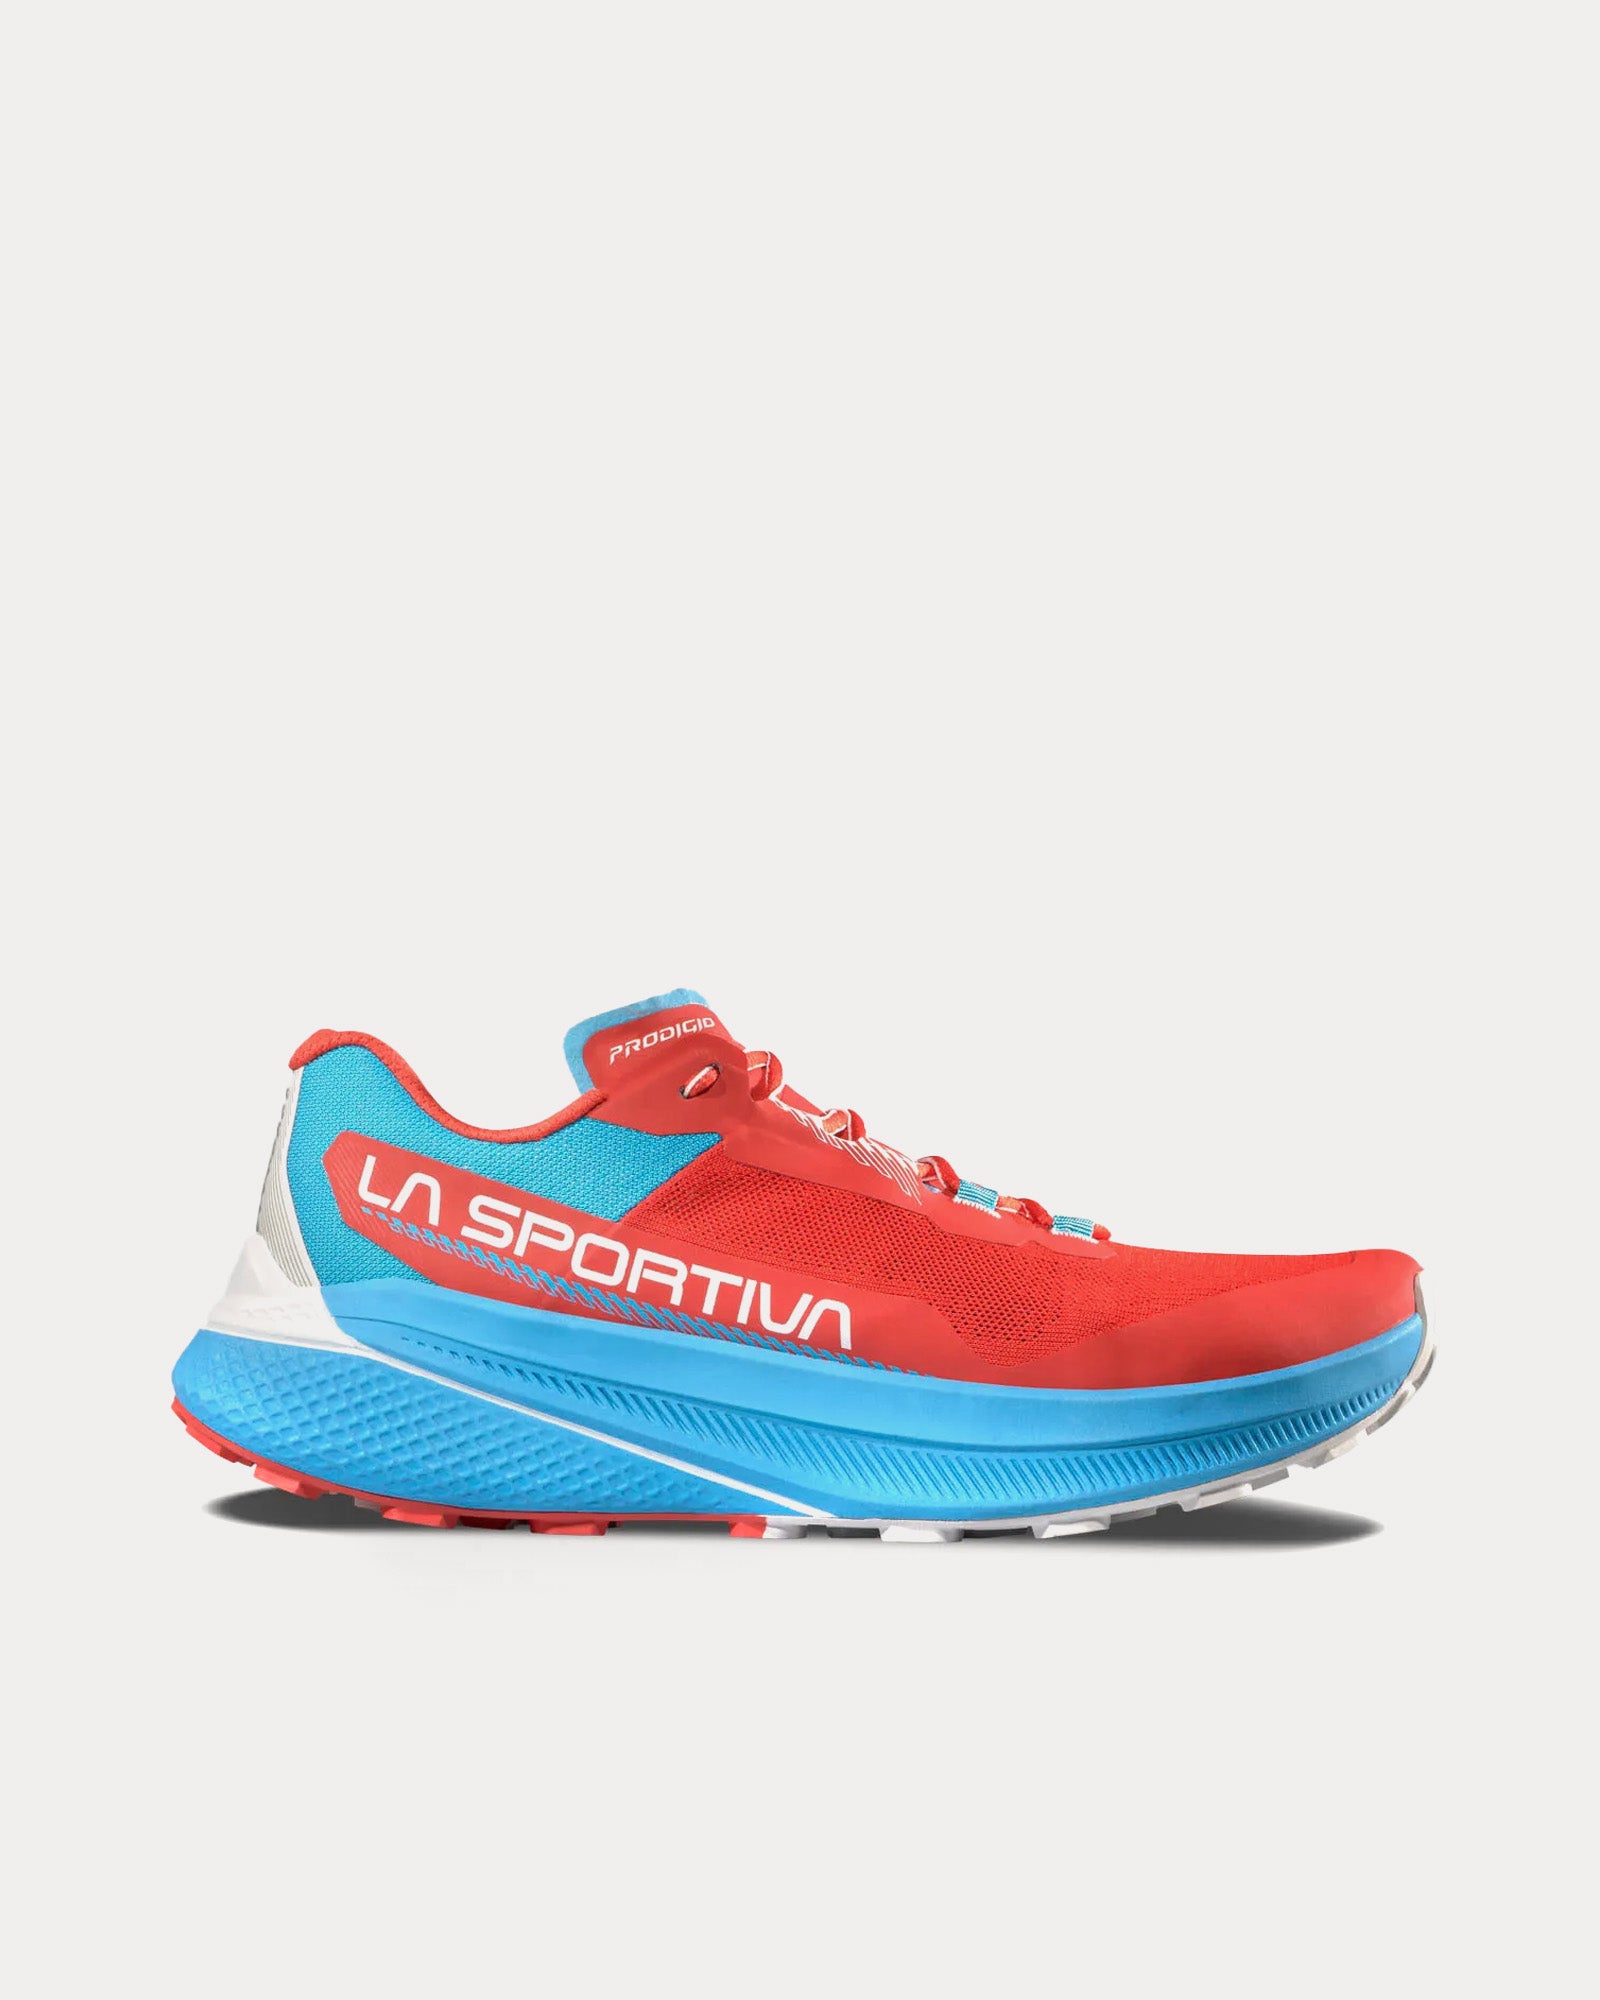 La Sportiva - Prodigio Hibiscus / Malibu Blue Running Shoes